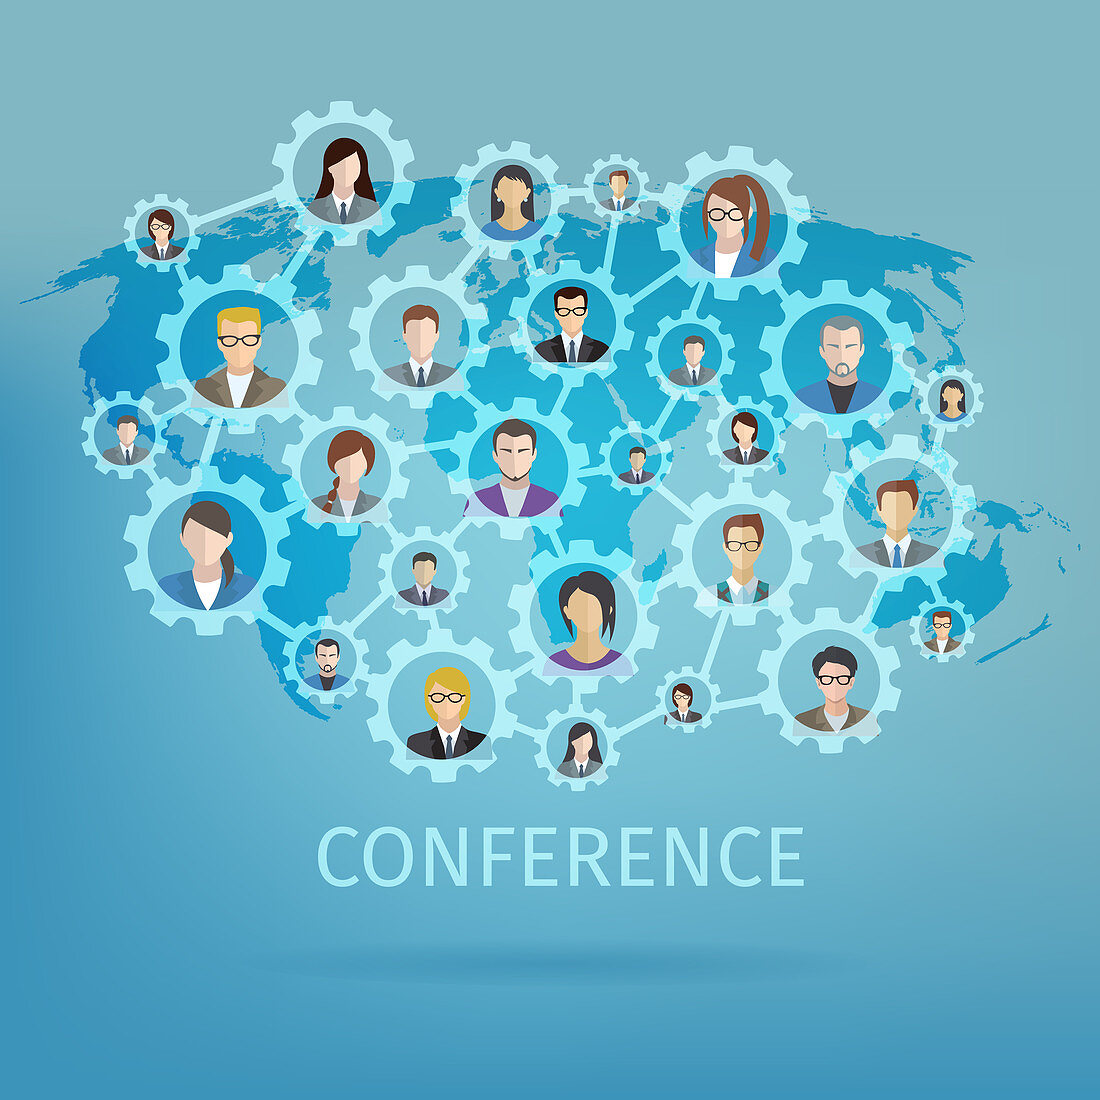 Conference, illustration